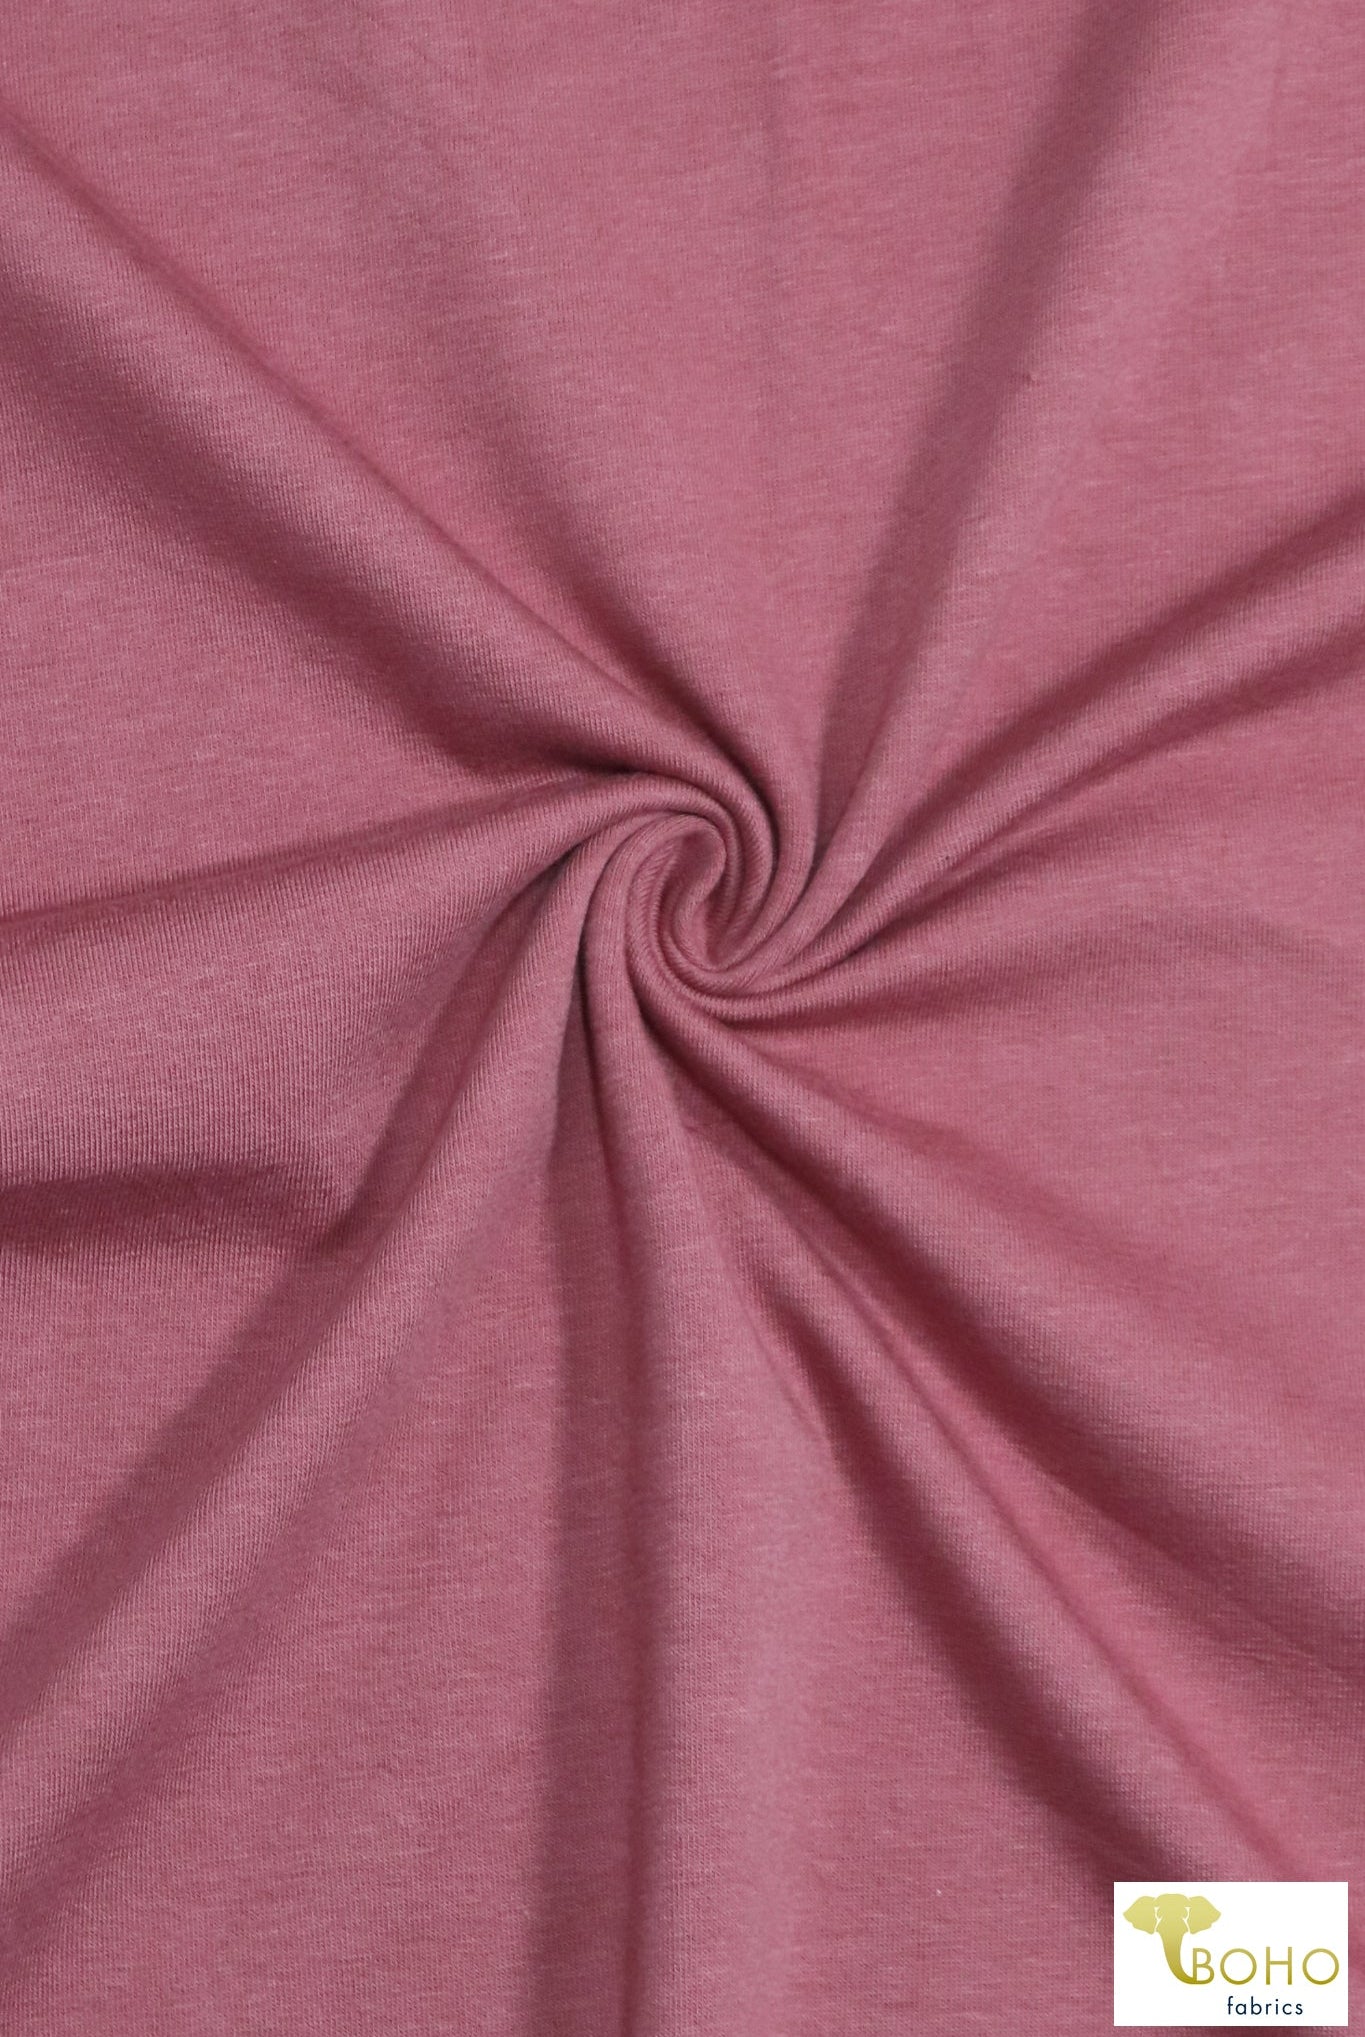 Chateau Rose Pink, Cotton Spandex Knit, 10 oz - Boho Fabrics